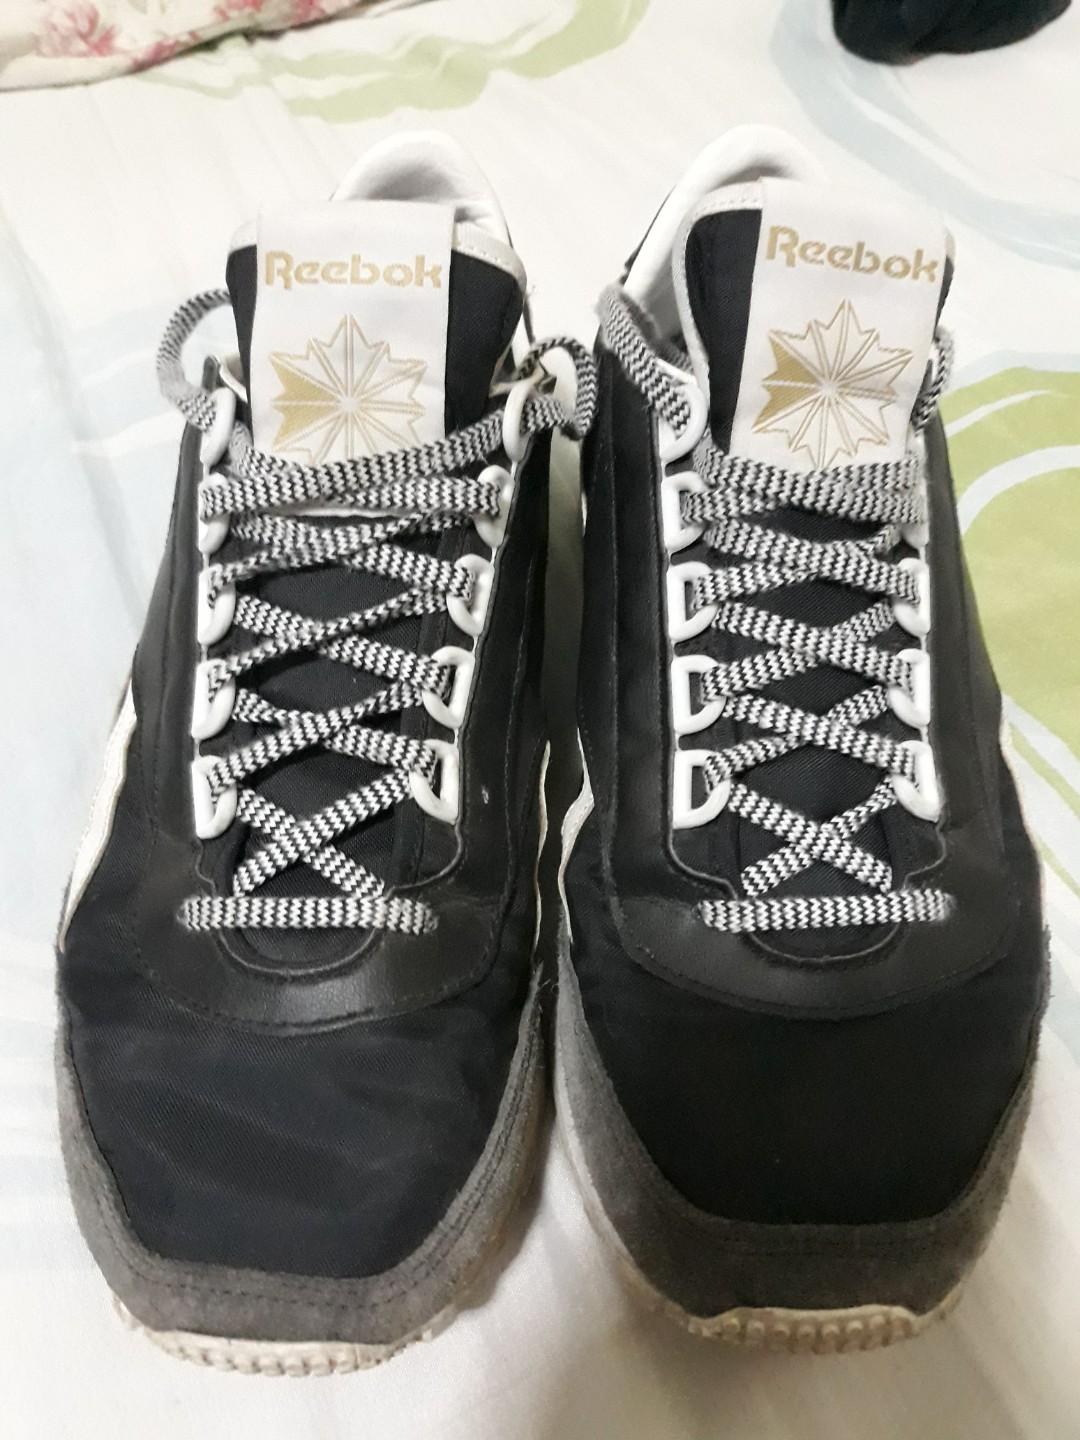 Reebok Athlete's Shoe Size 8.5US Men on 